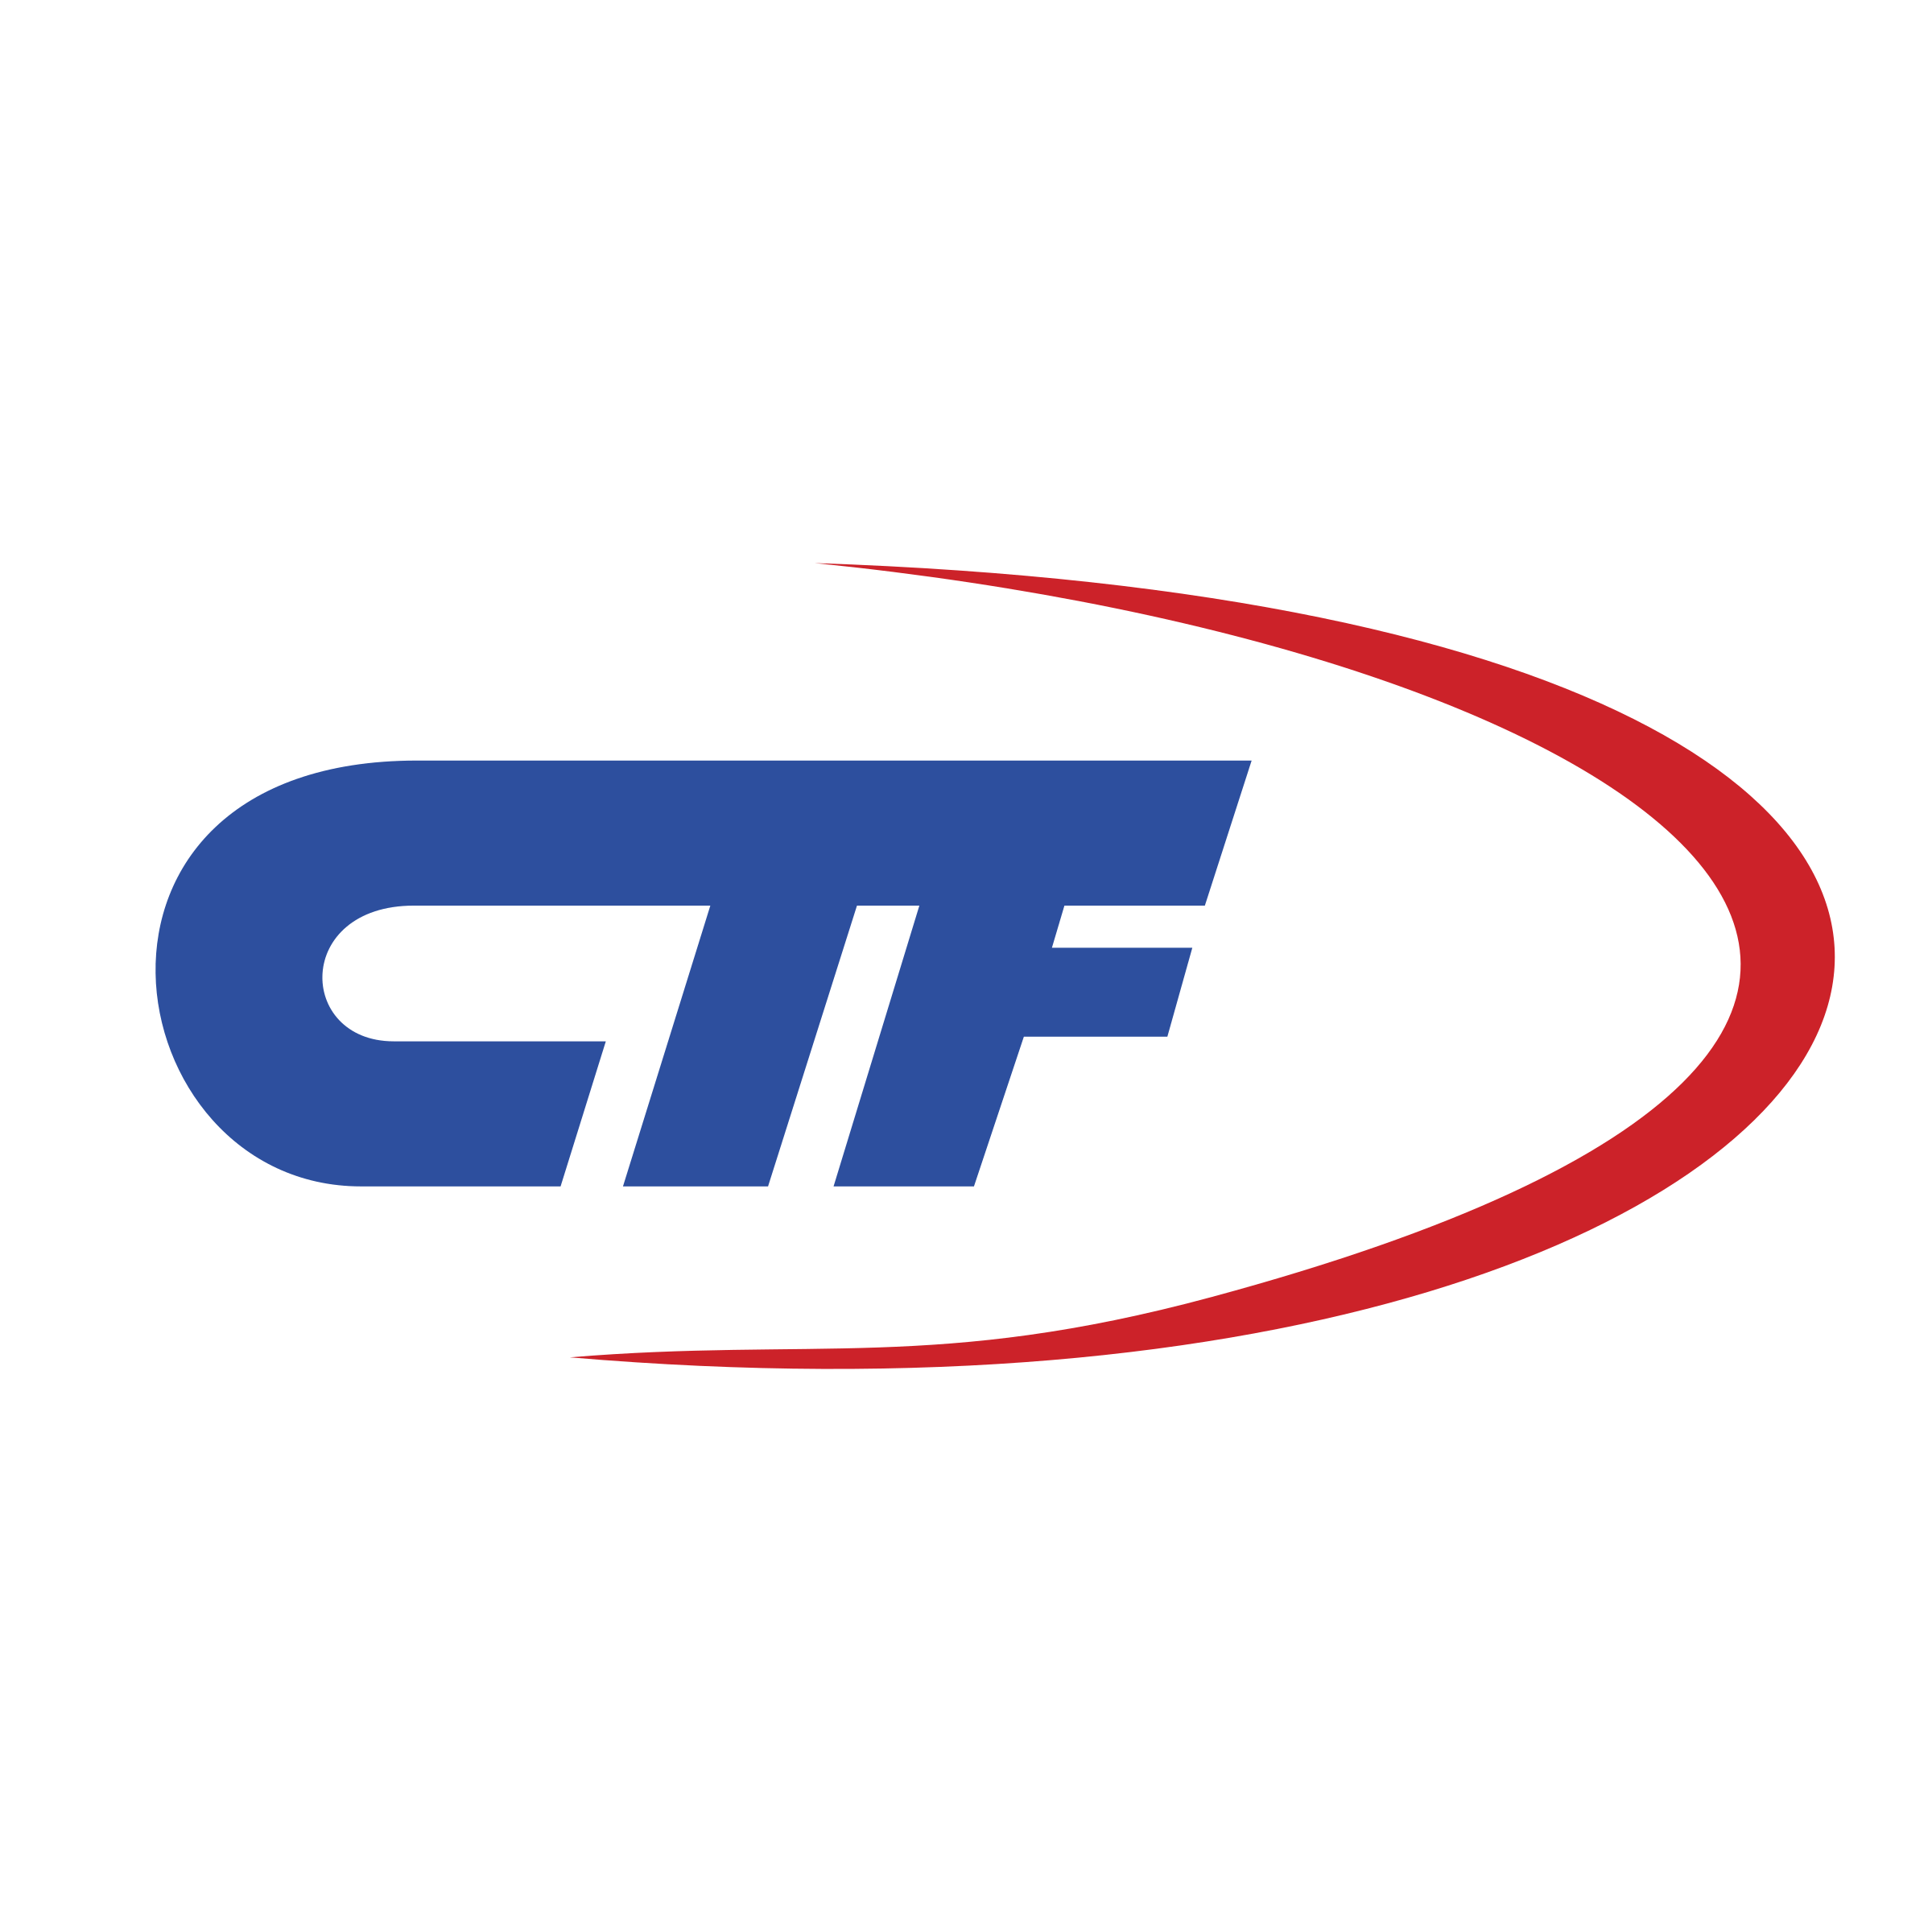 CTF Logo - CTF Logo PNG Transparent & SVG Vector - Freebie Supply